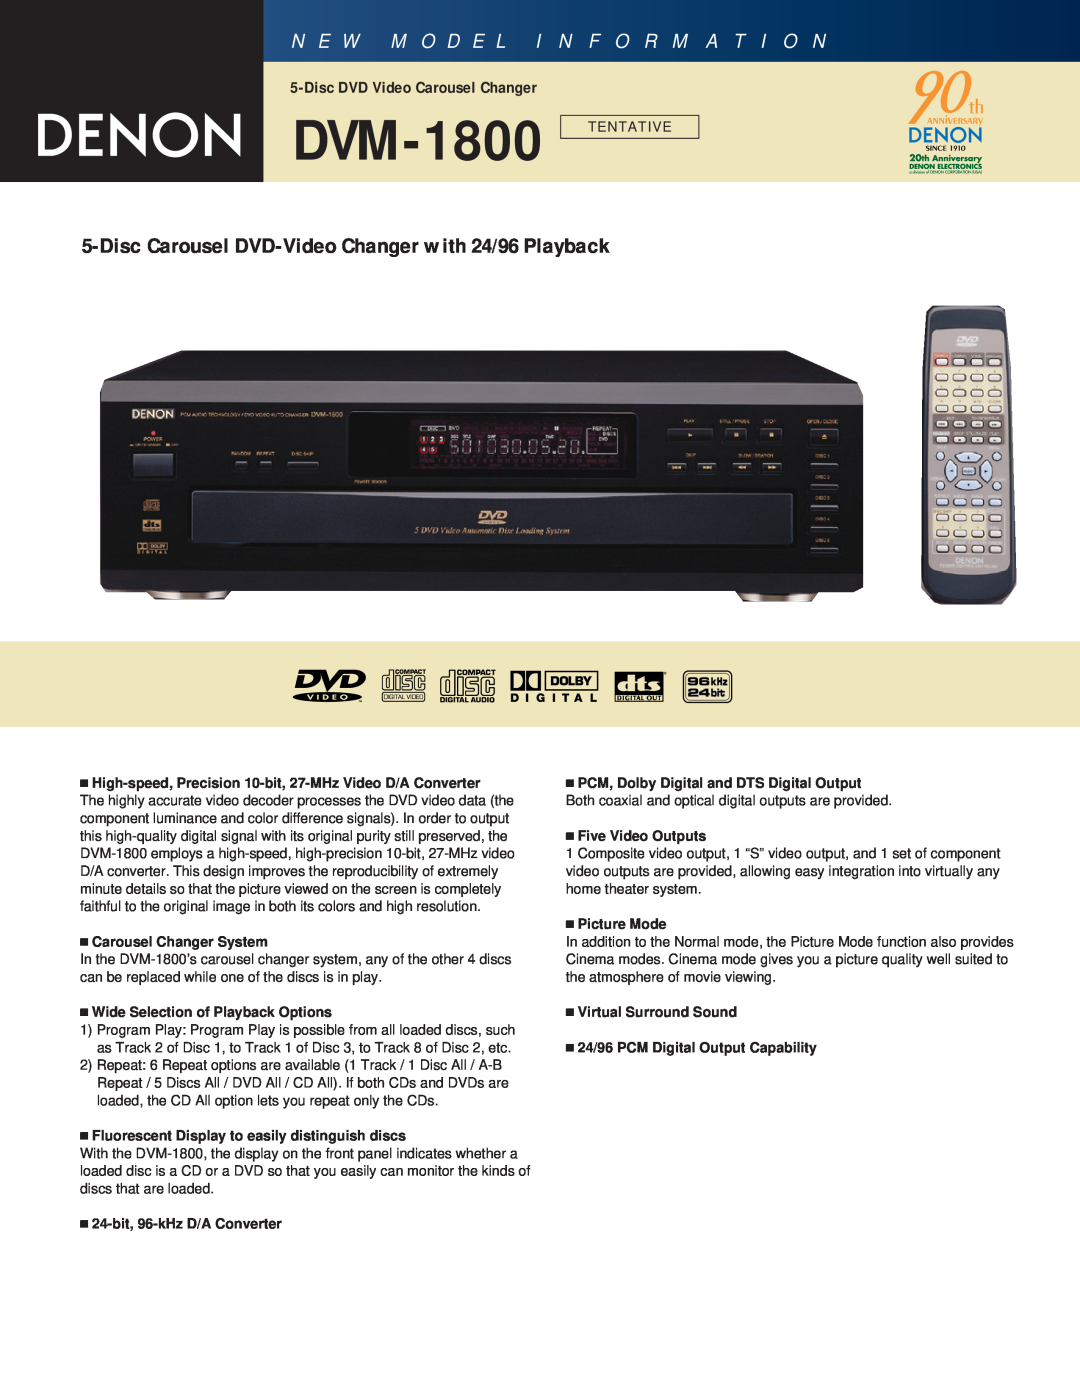 Denon DVM-1800 manual N E W M O D E L I N F O R M A T I O N, High-speed, Precision 10-bit, 27-MHz Video D/A Converter 